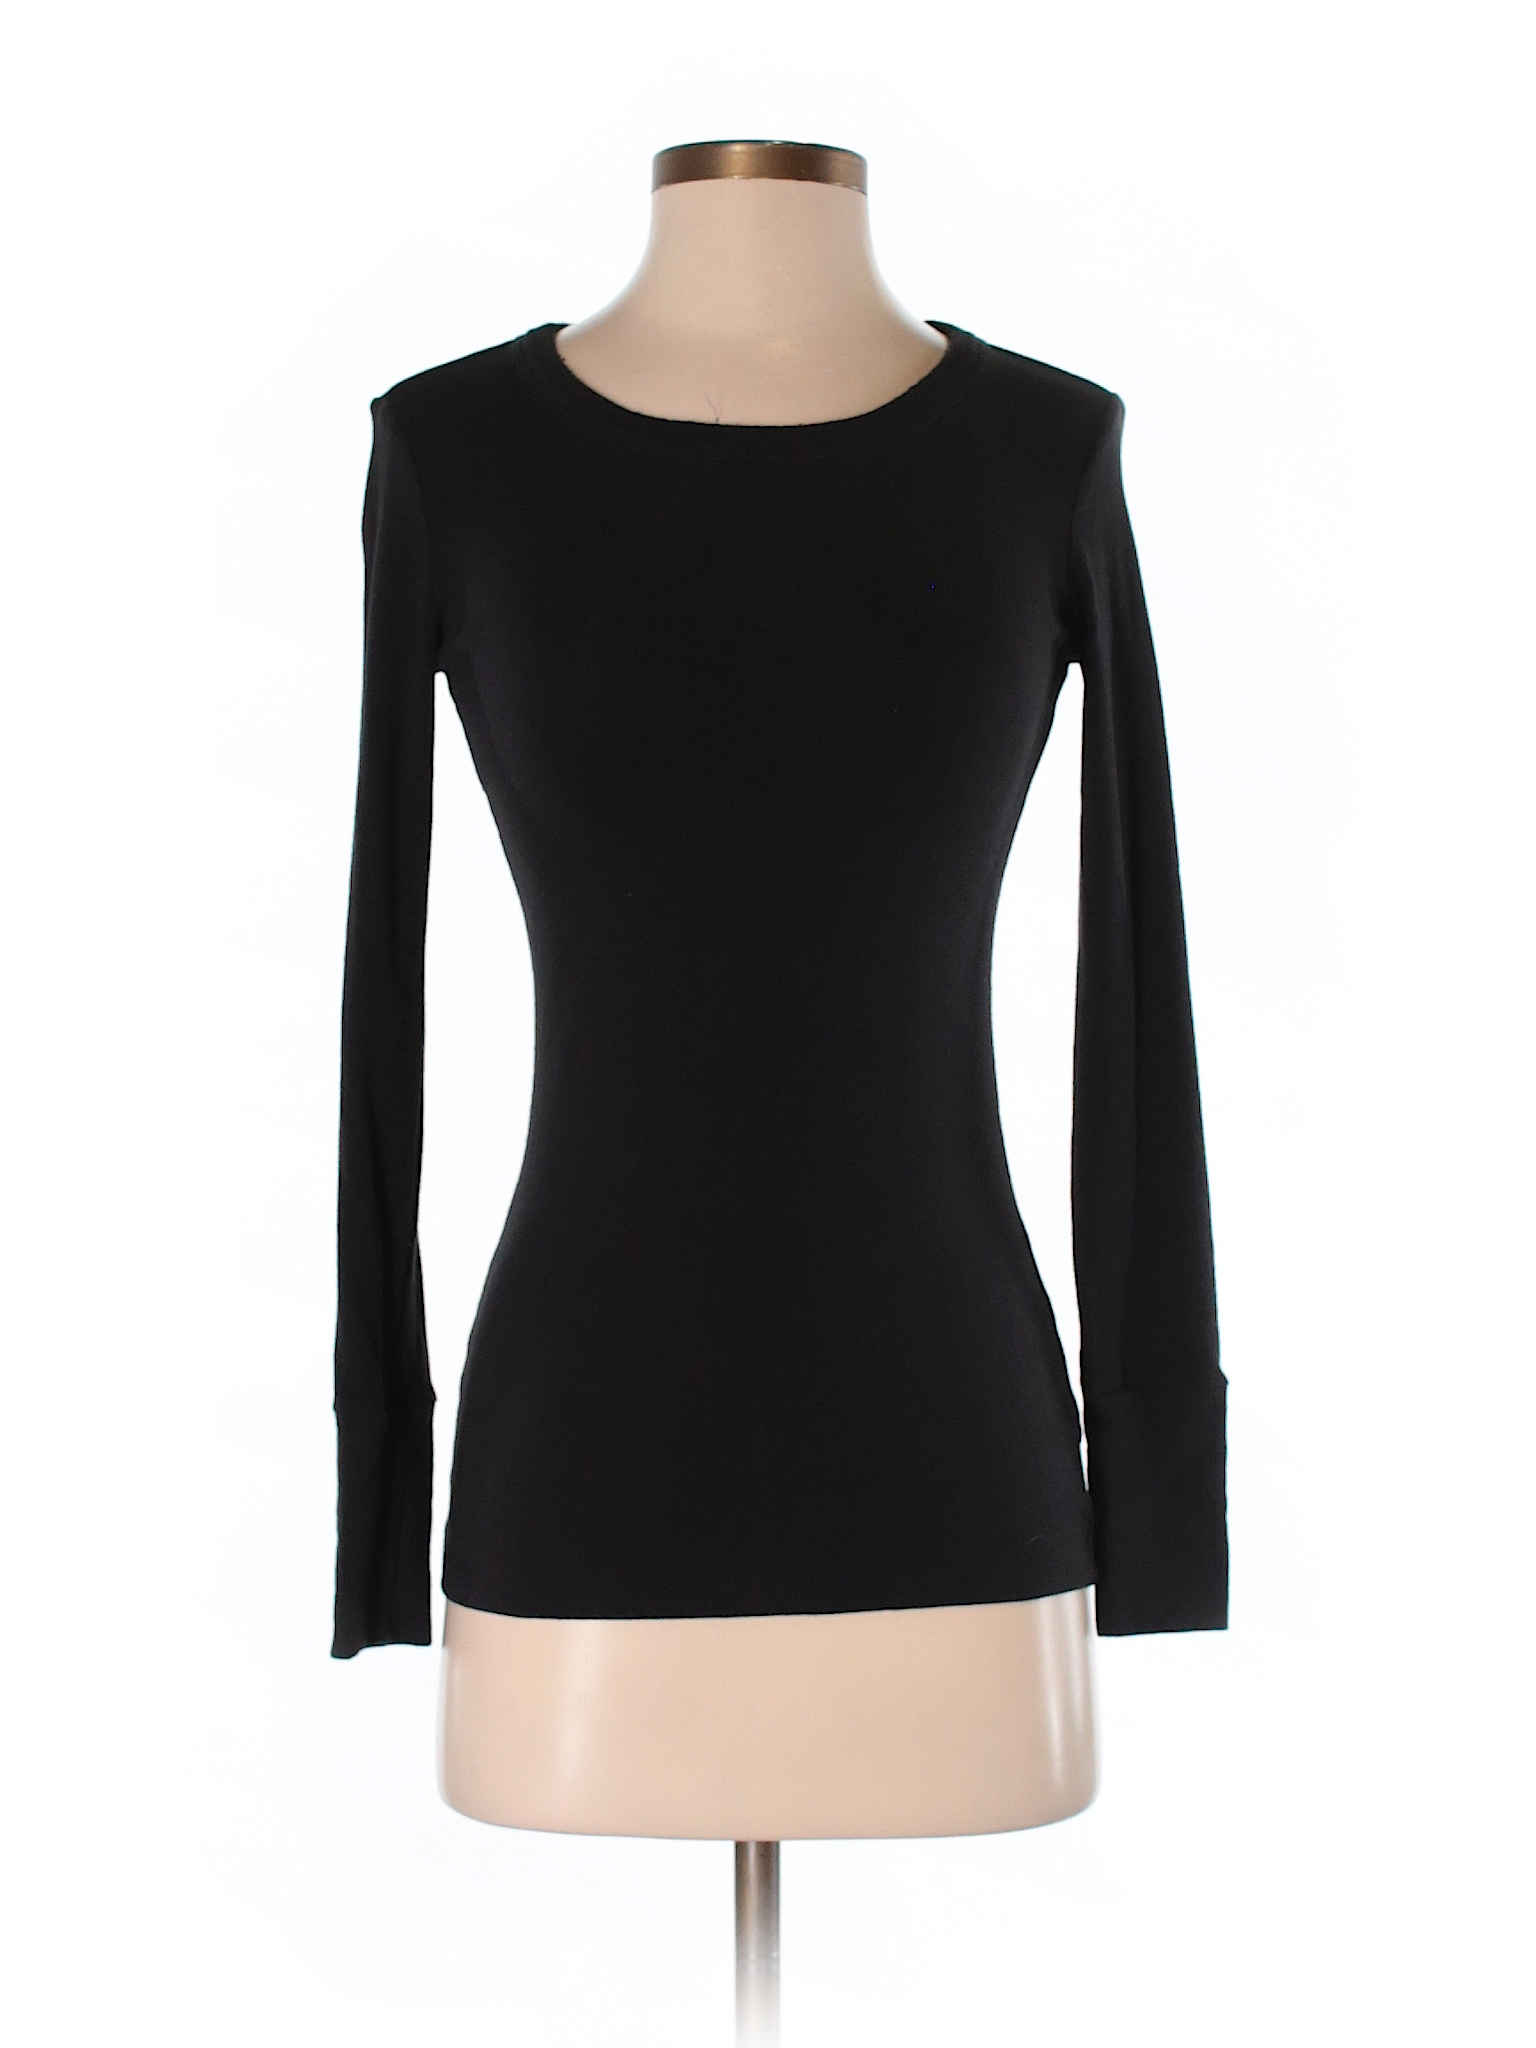 Cynthia Rowley TJX Solid Black Long Sleeve T-Shirt Size S - 66% off ...